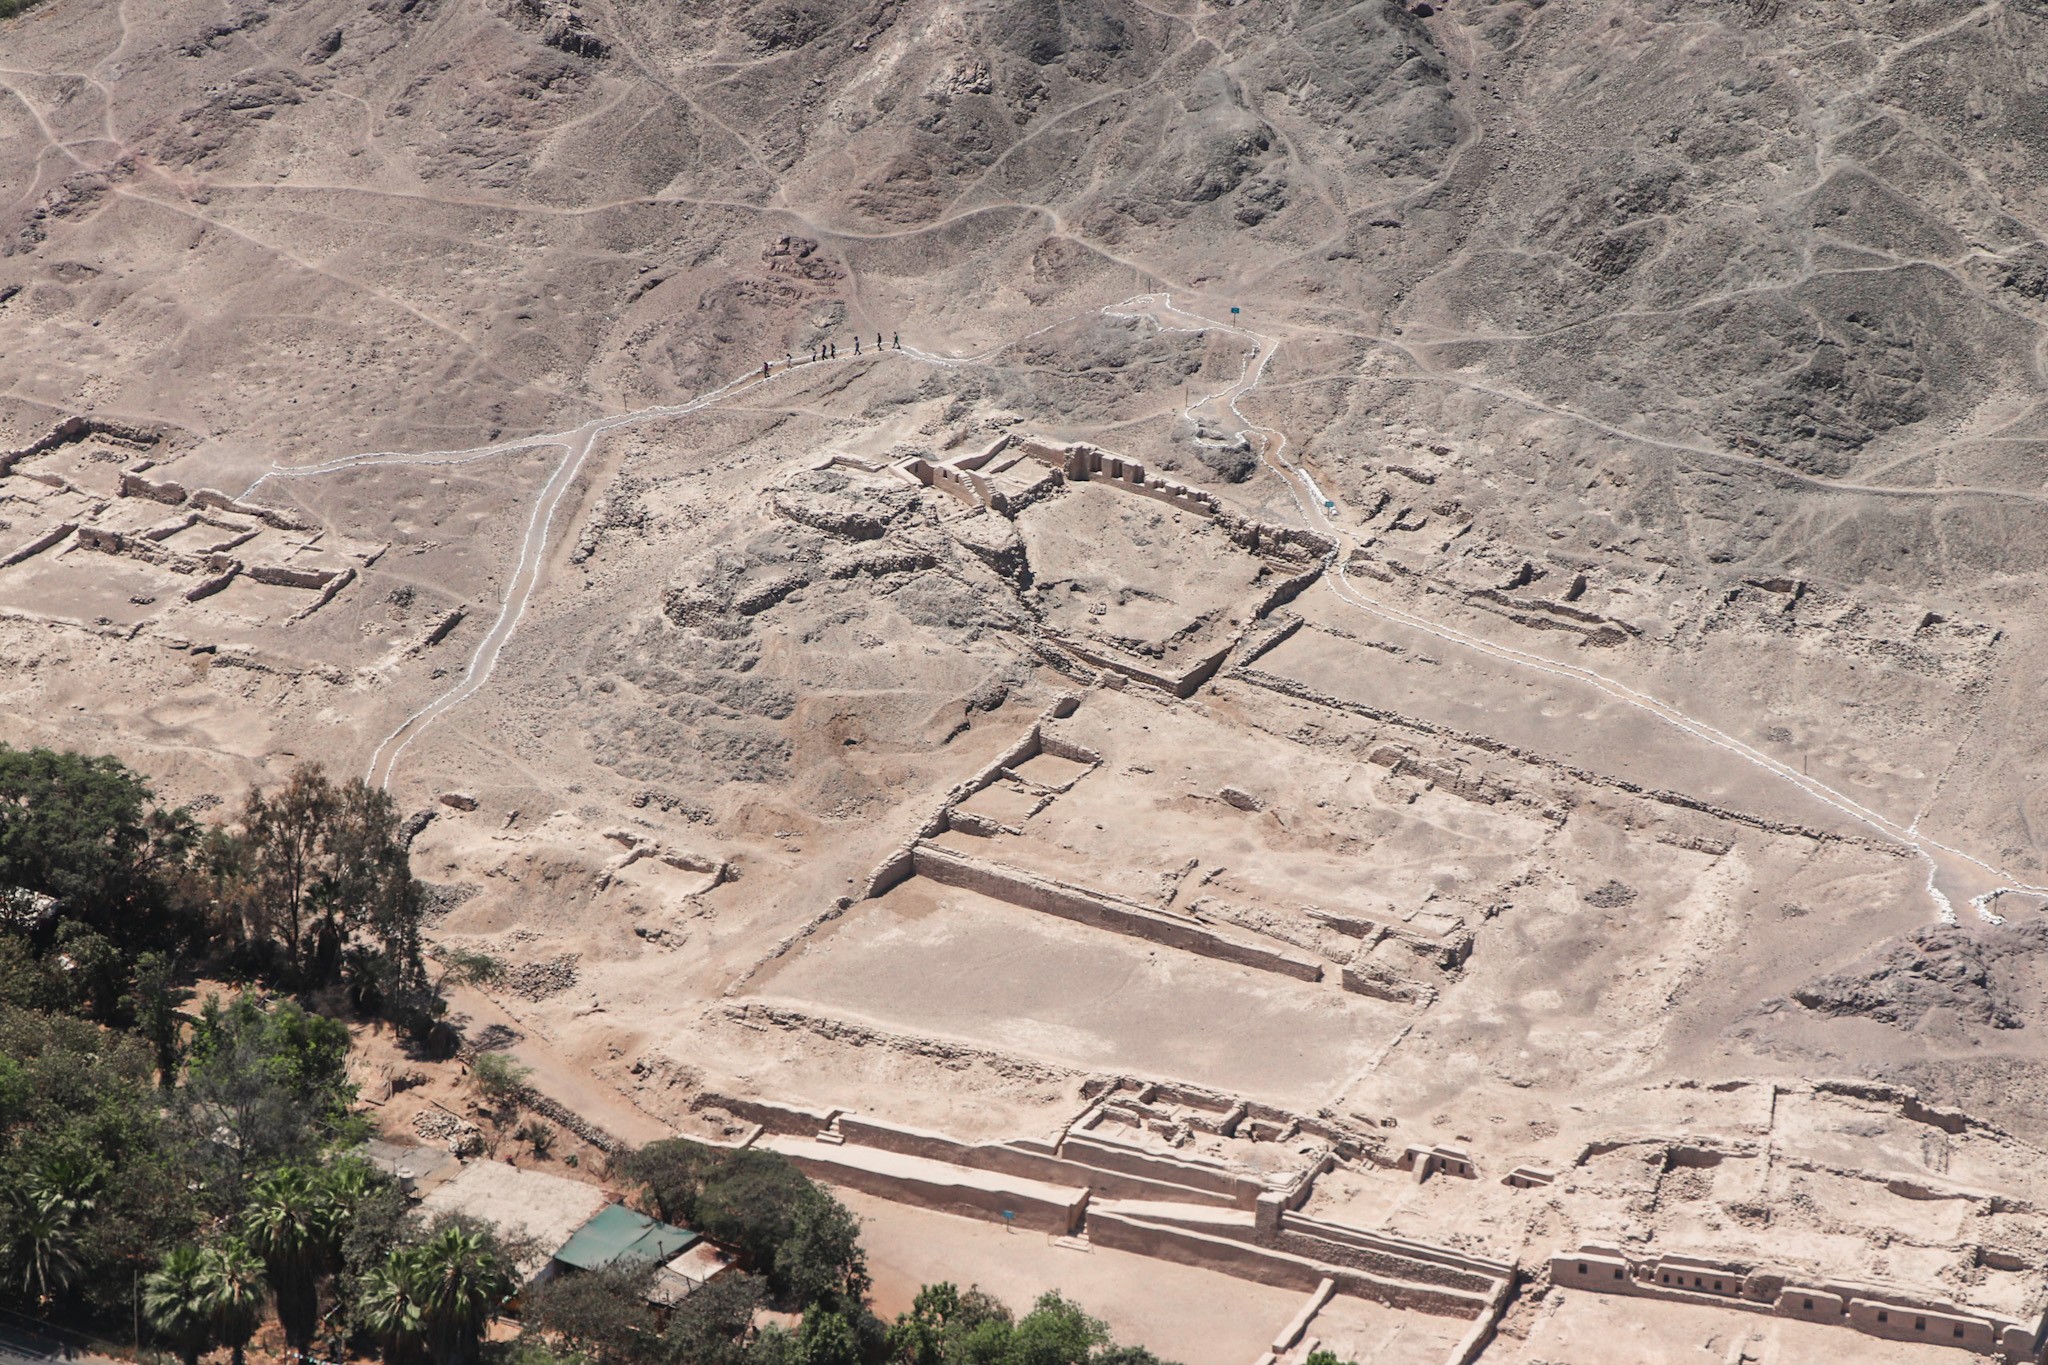 Nazca Travel Guide: Los Paredones (The Walls)